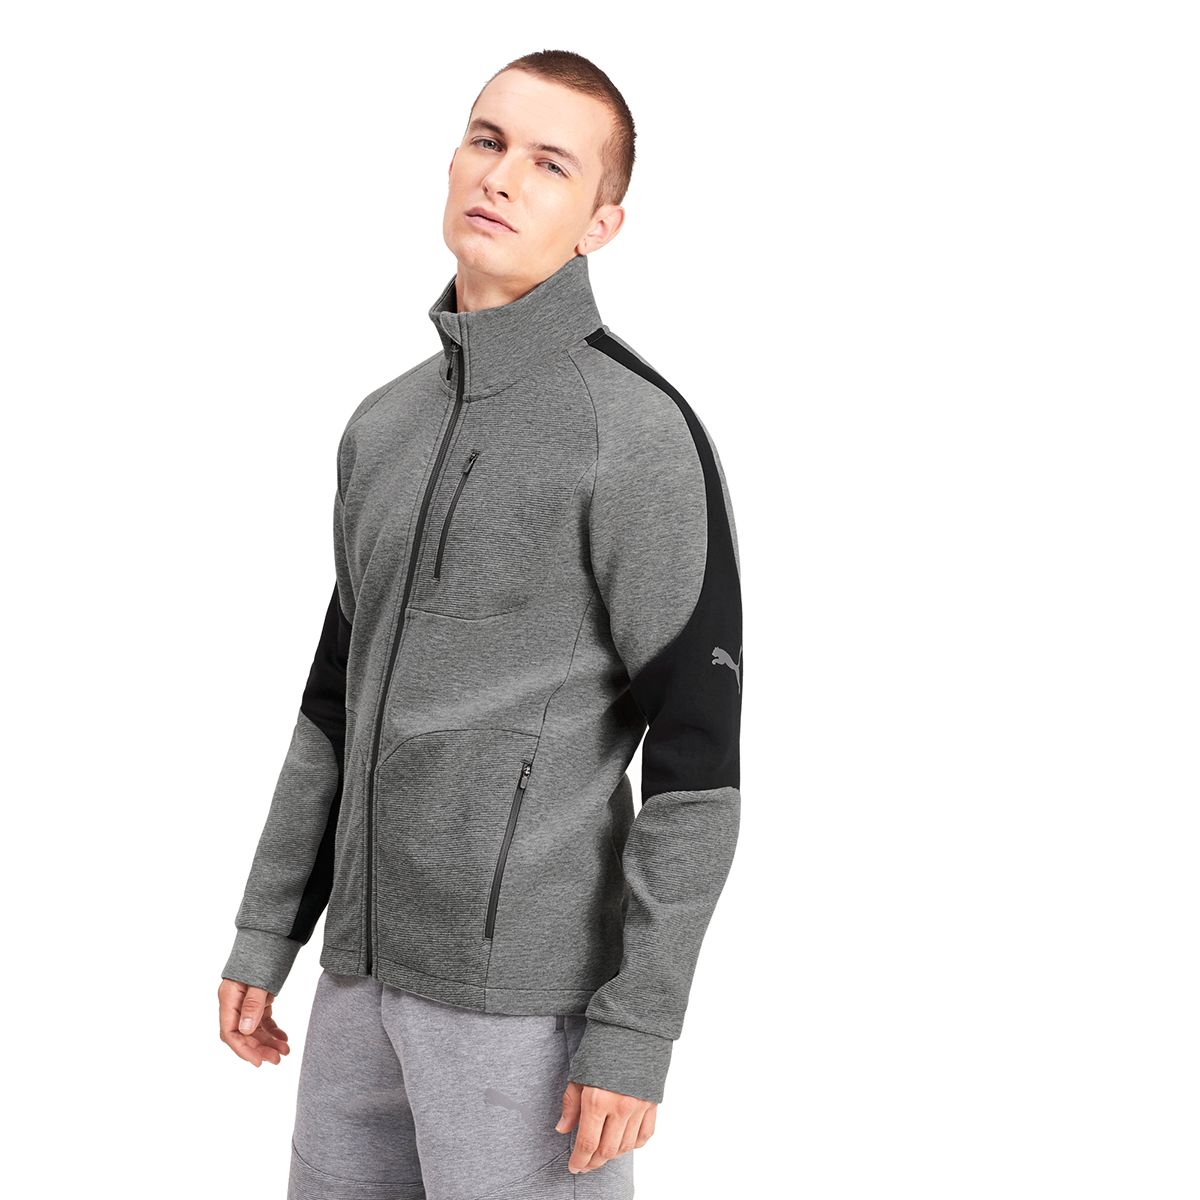 PUMA Herren Evostripe Jacket  Pullover Sweatshirt Trainingsjacke 580095 03 Grau